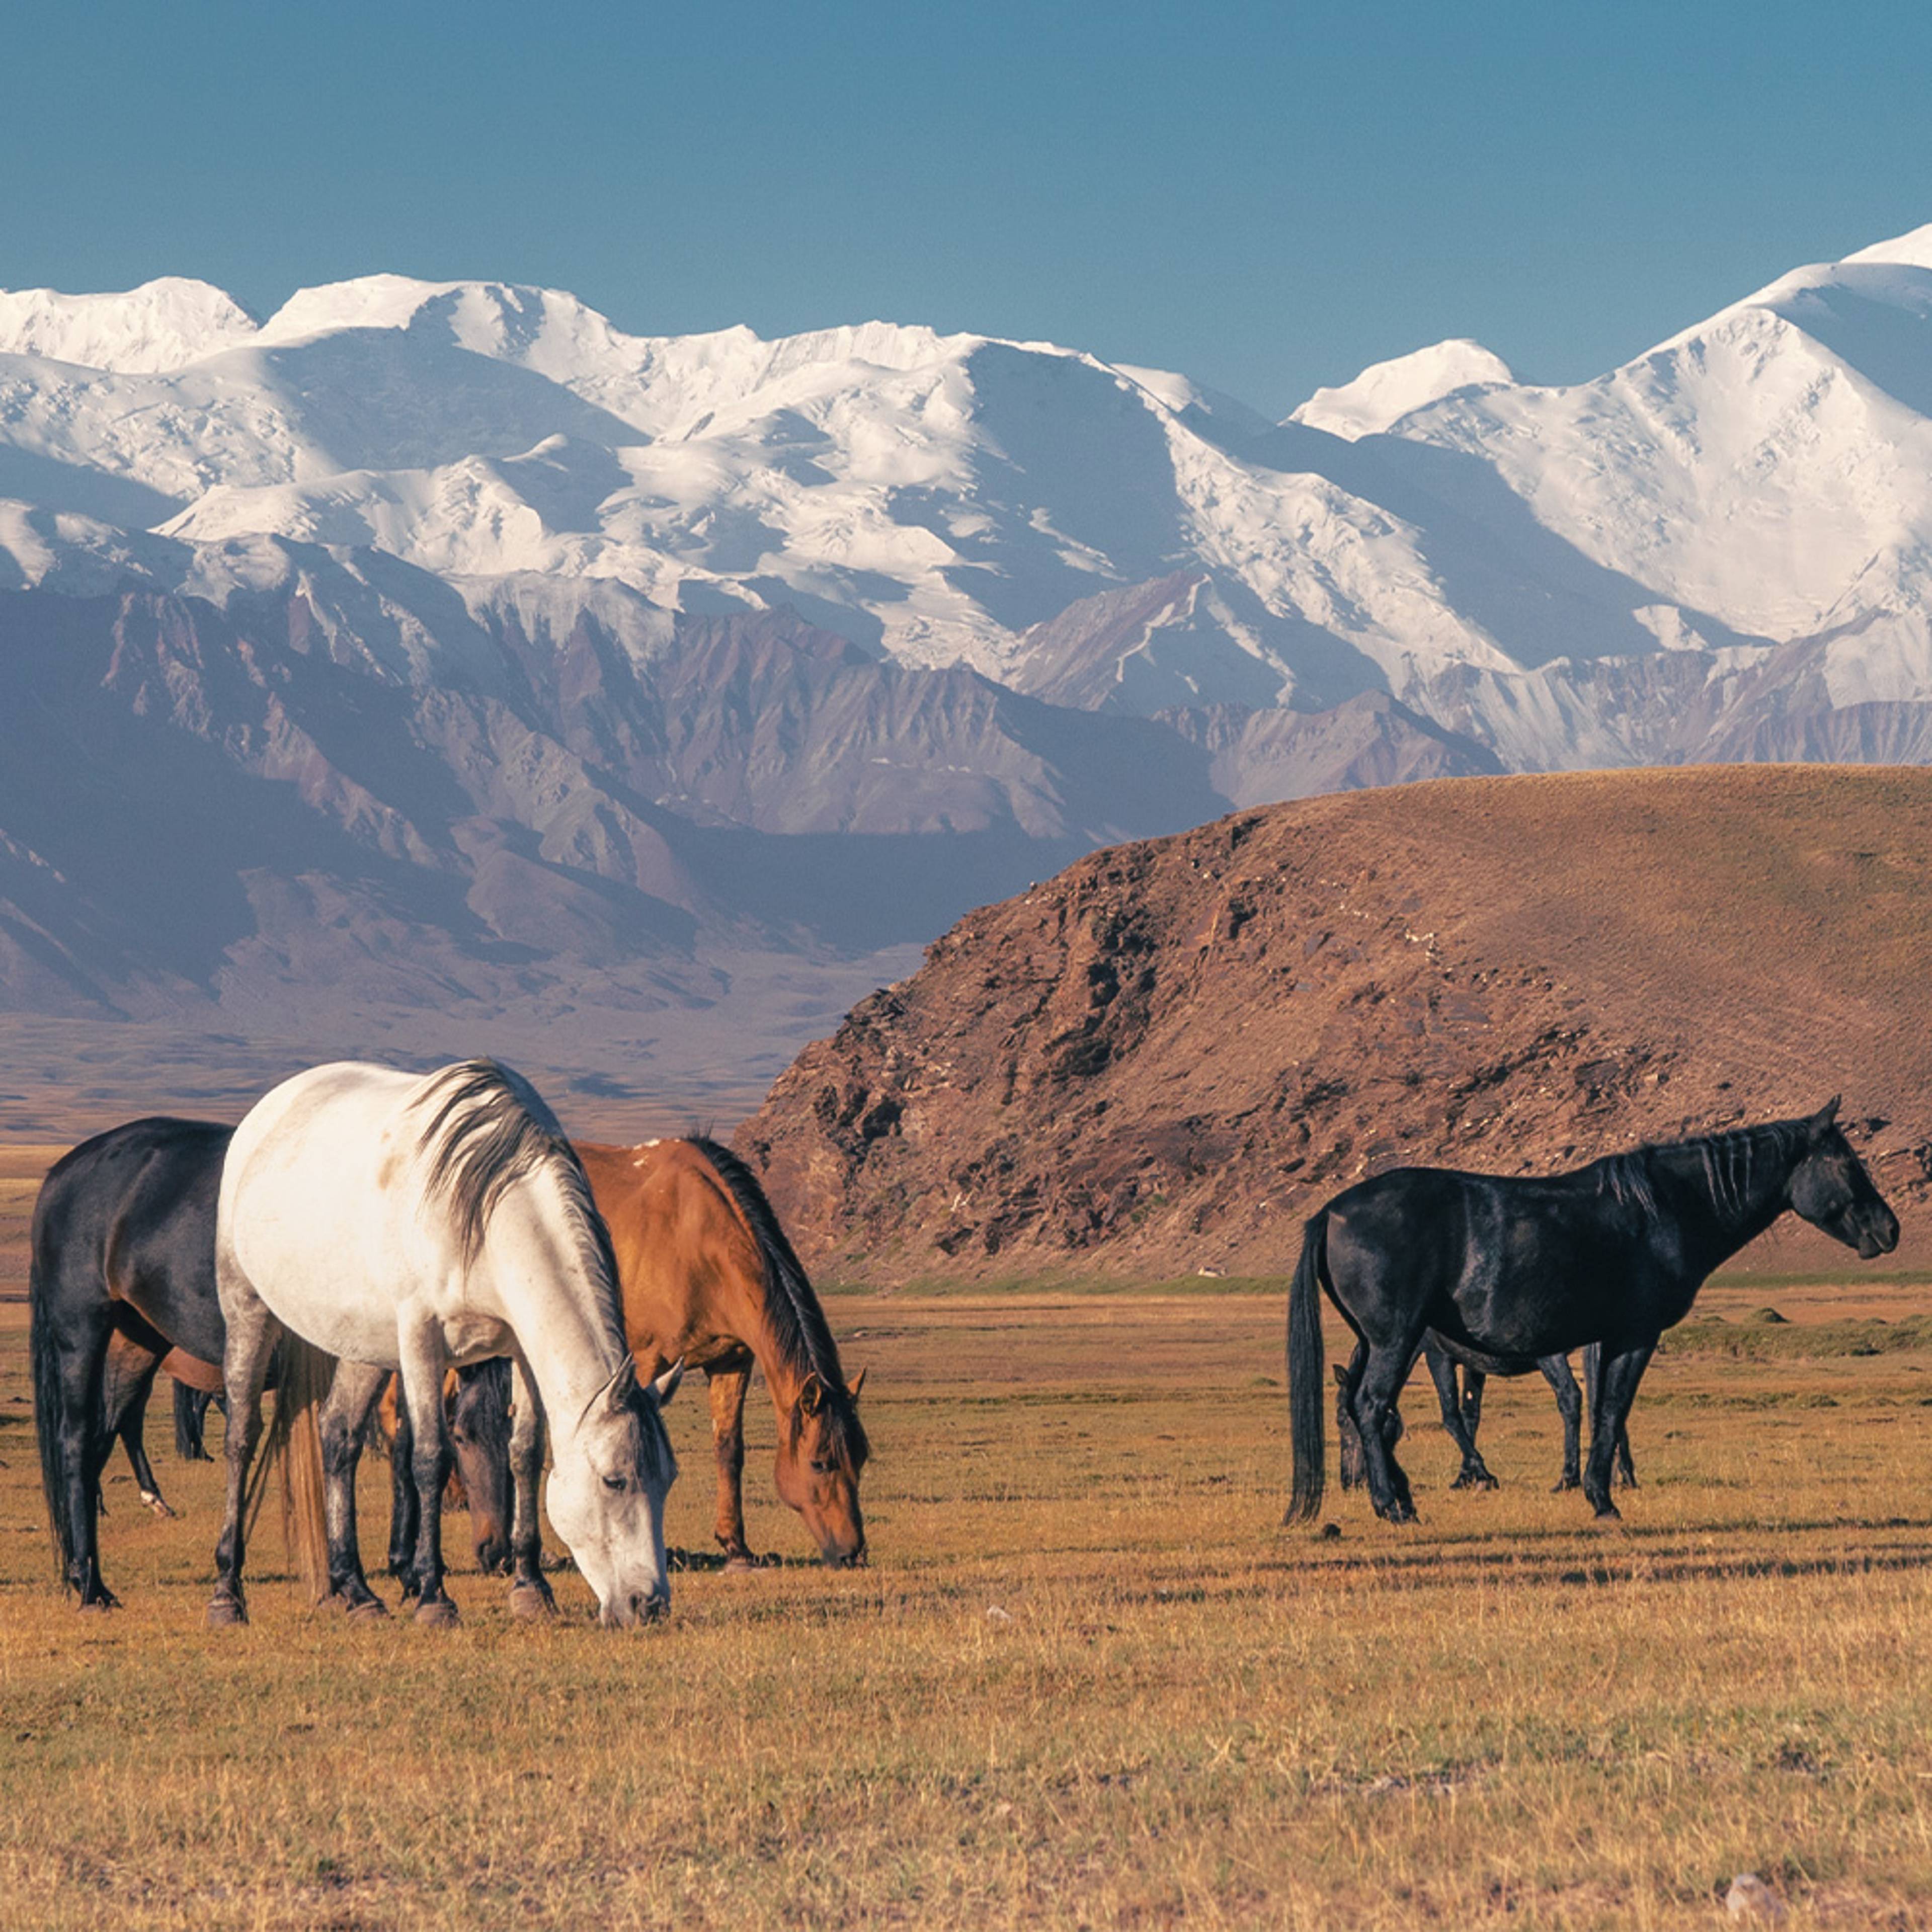 Individuelle Natur Reisen Kirgistan - Reise jetzt individuell gestalten